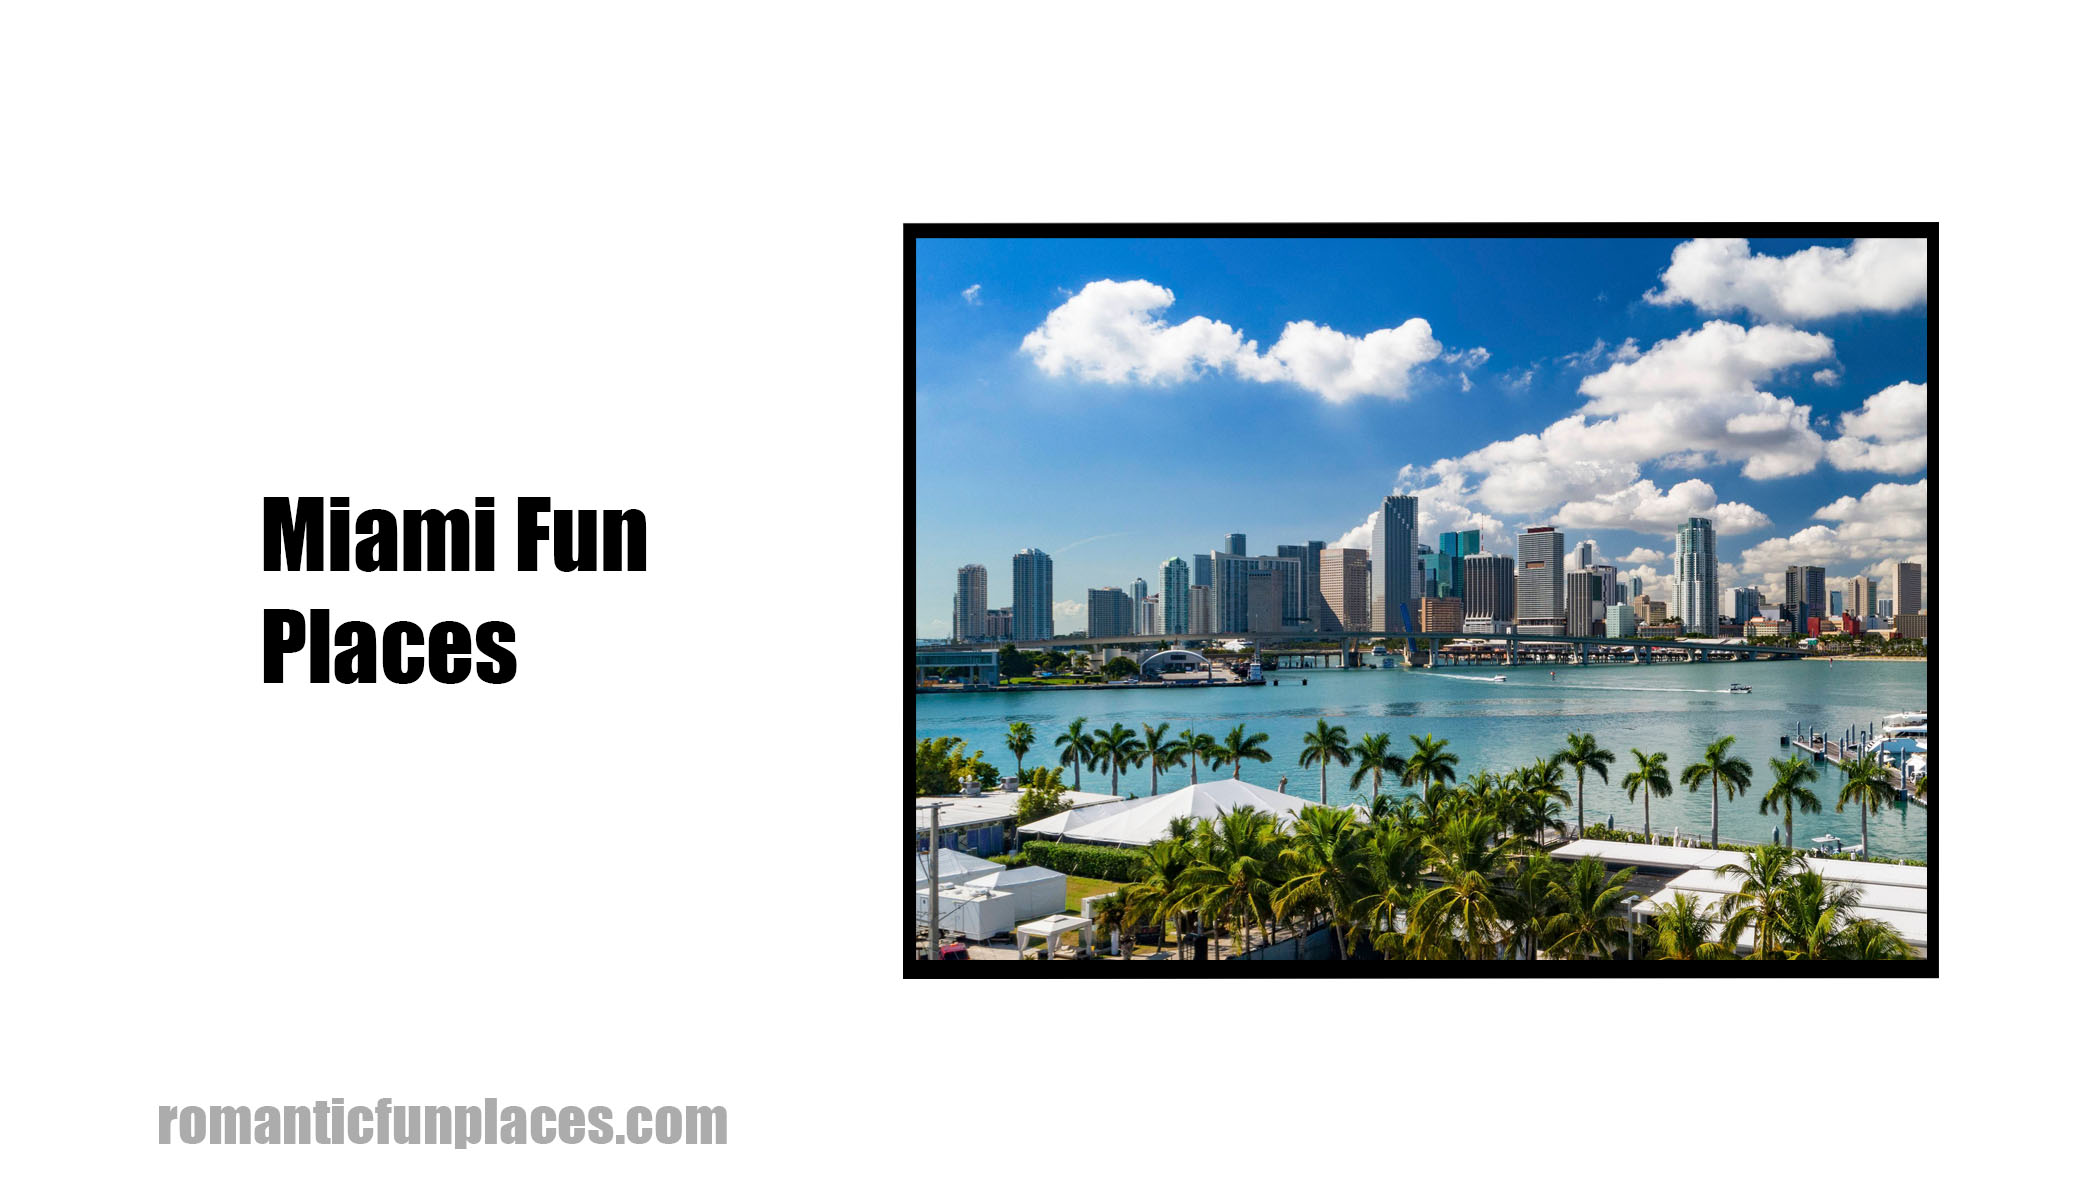 Miami Fun Places